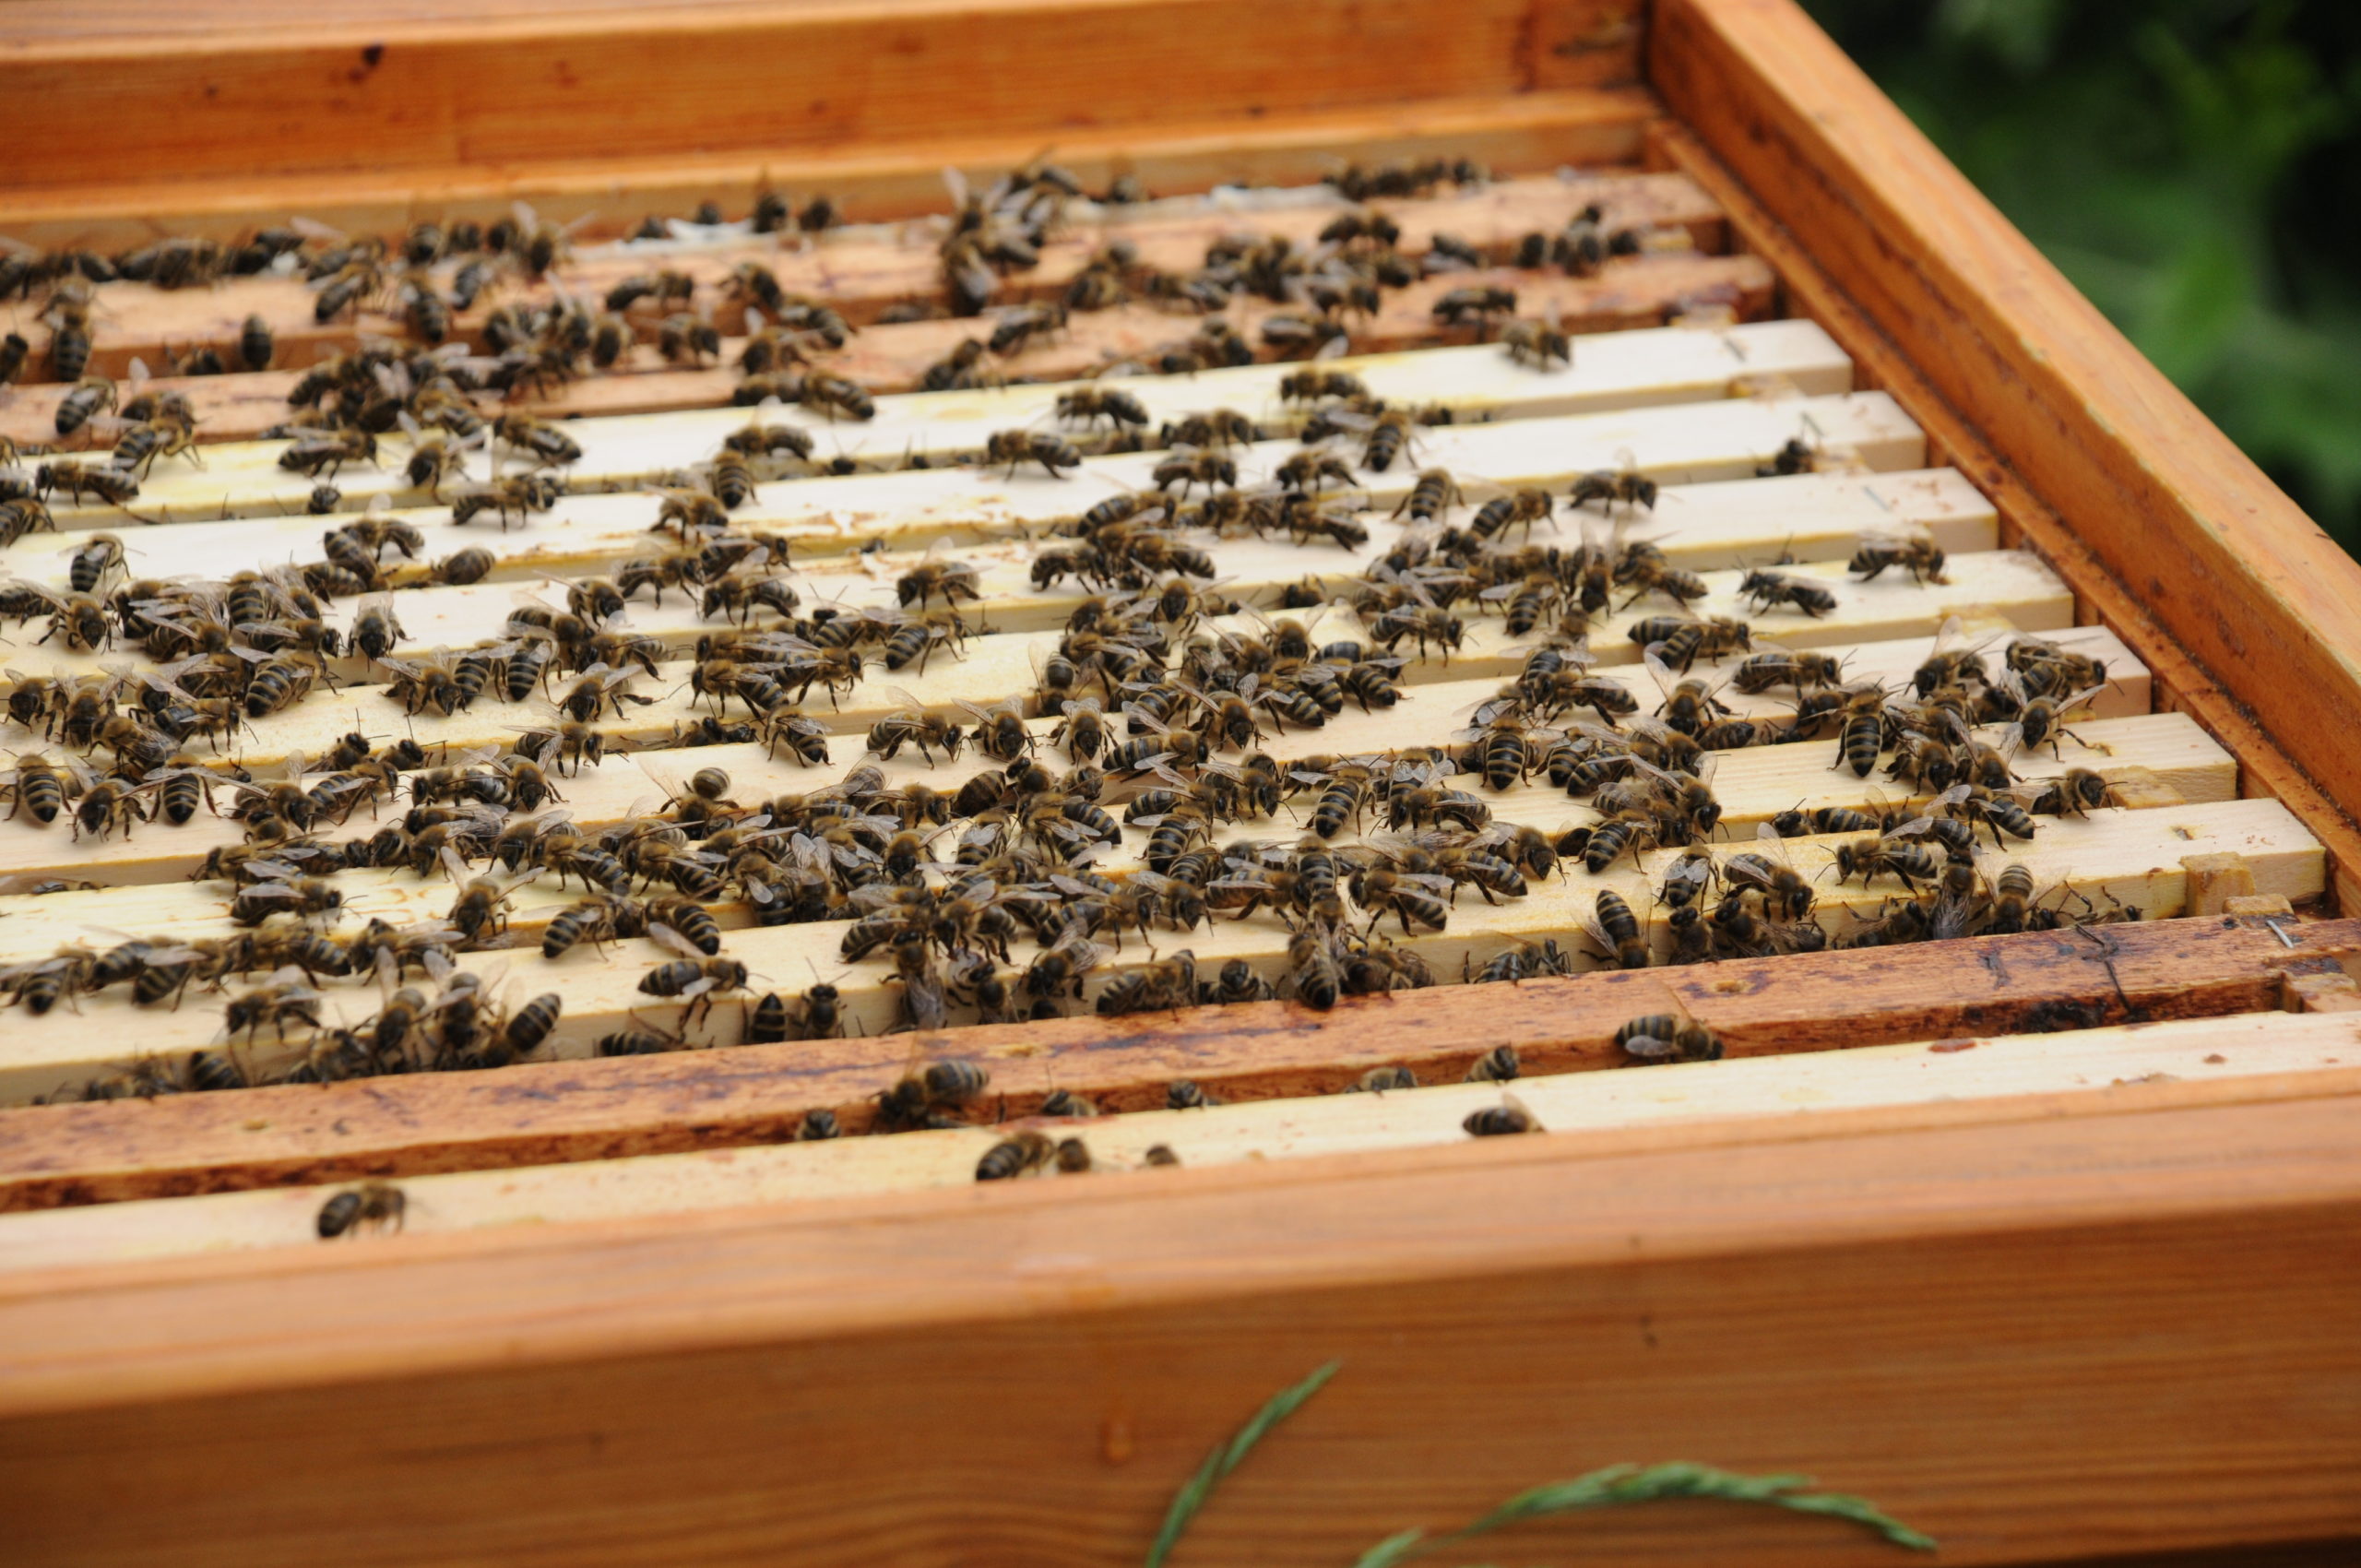 Bienen in der Beute